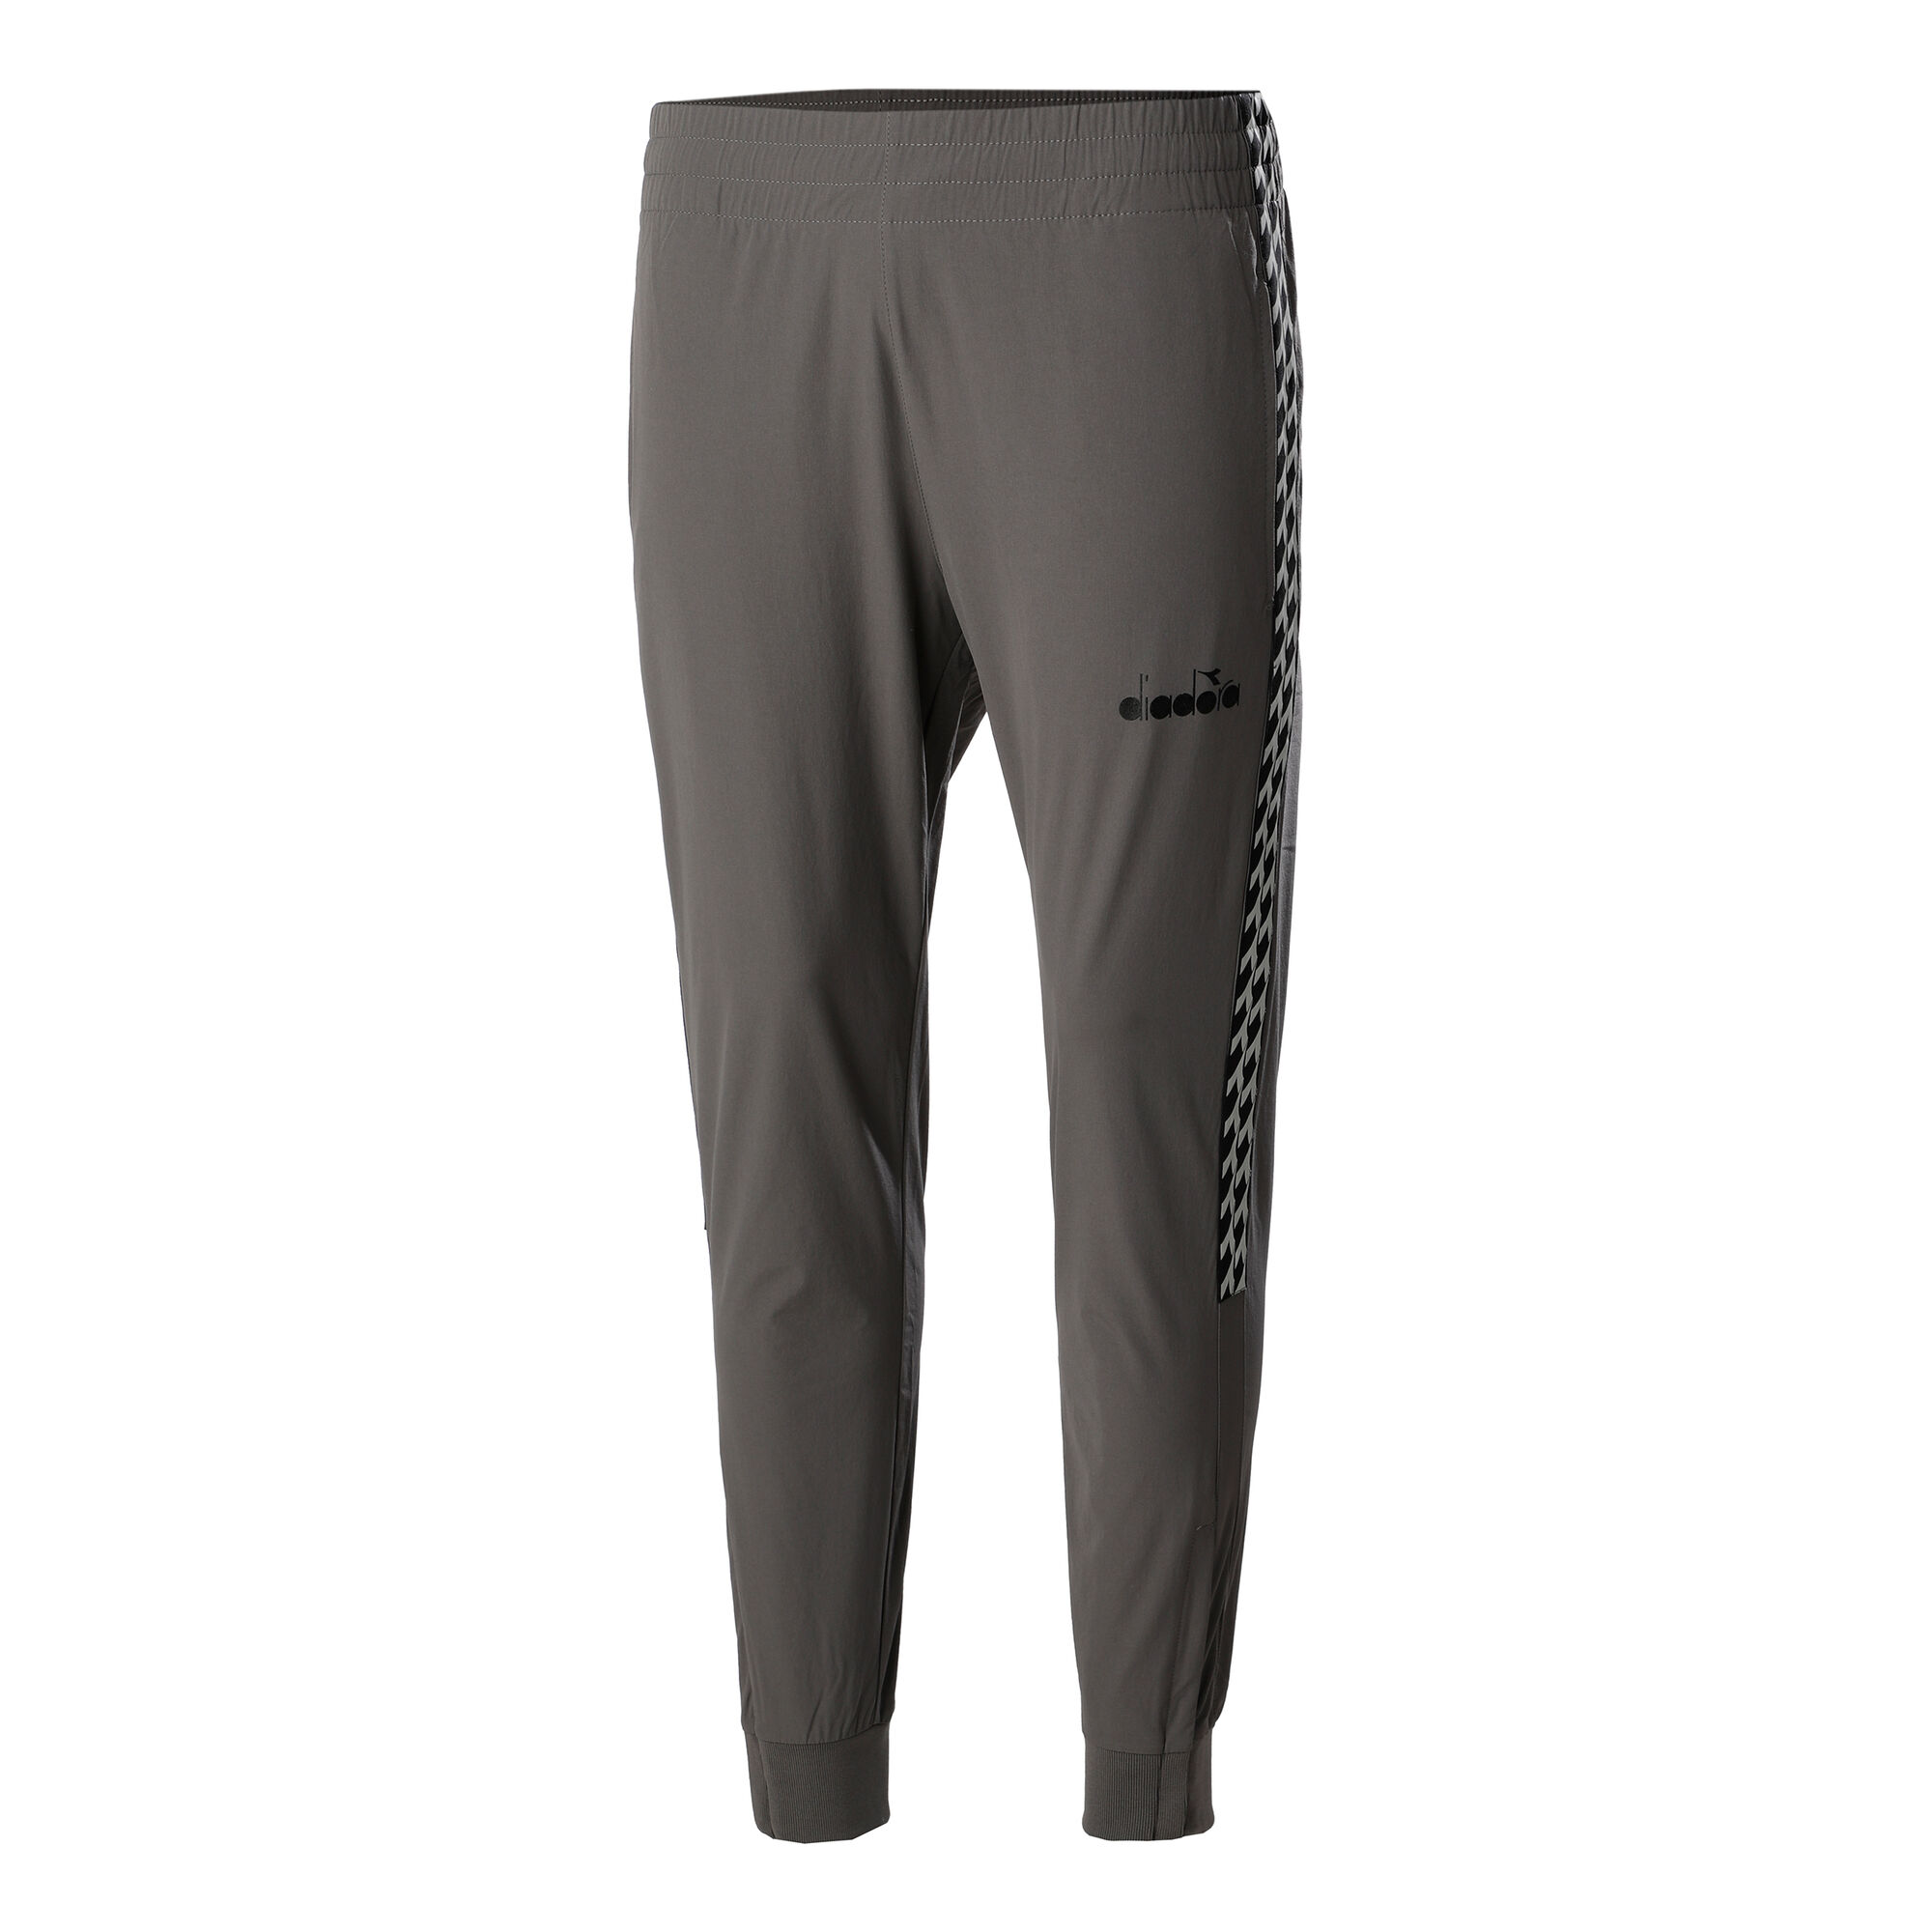 buy Diadora Challenge Training Pants Men - Grey, Black online | Tennis ...